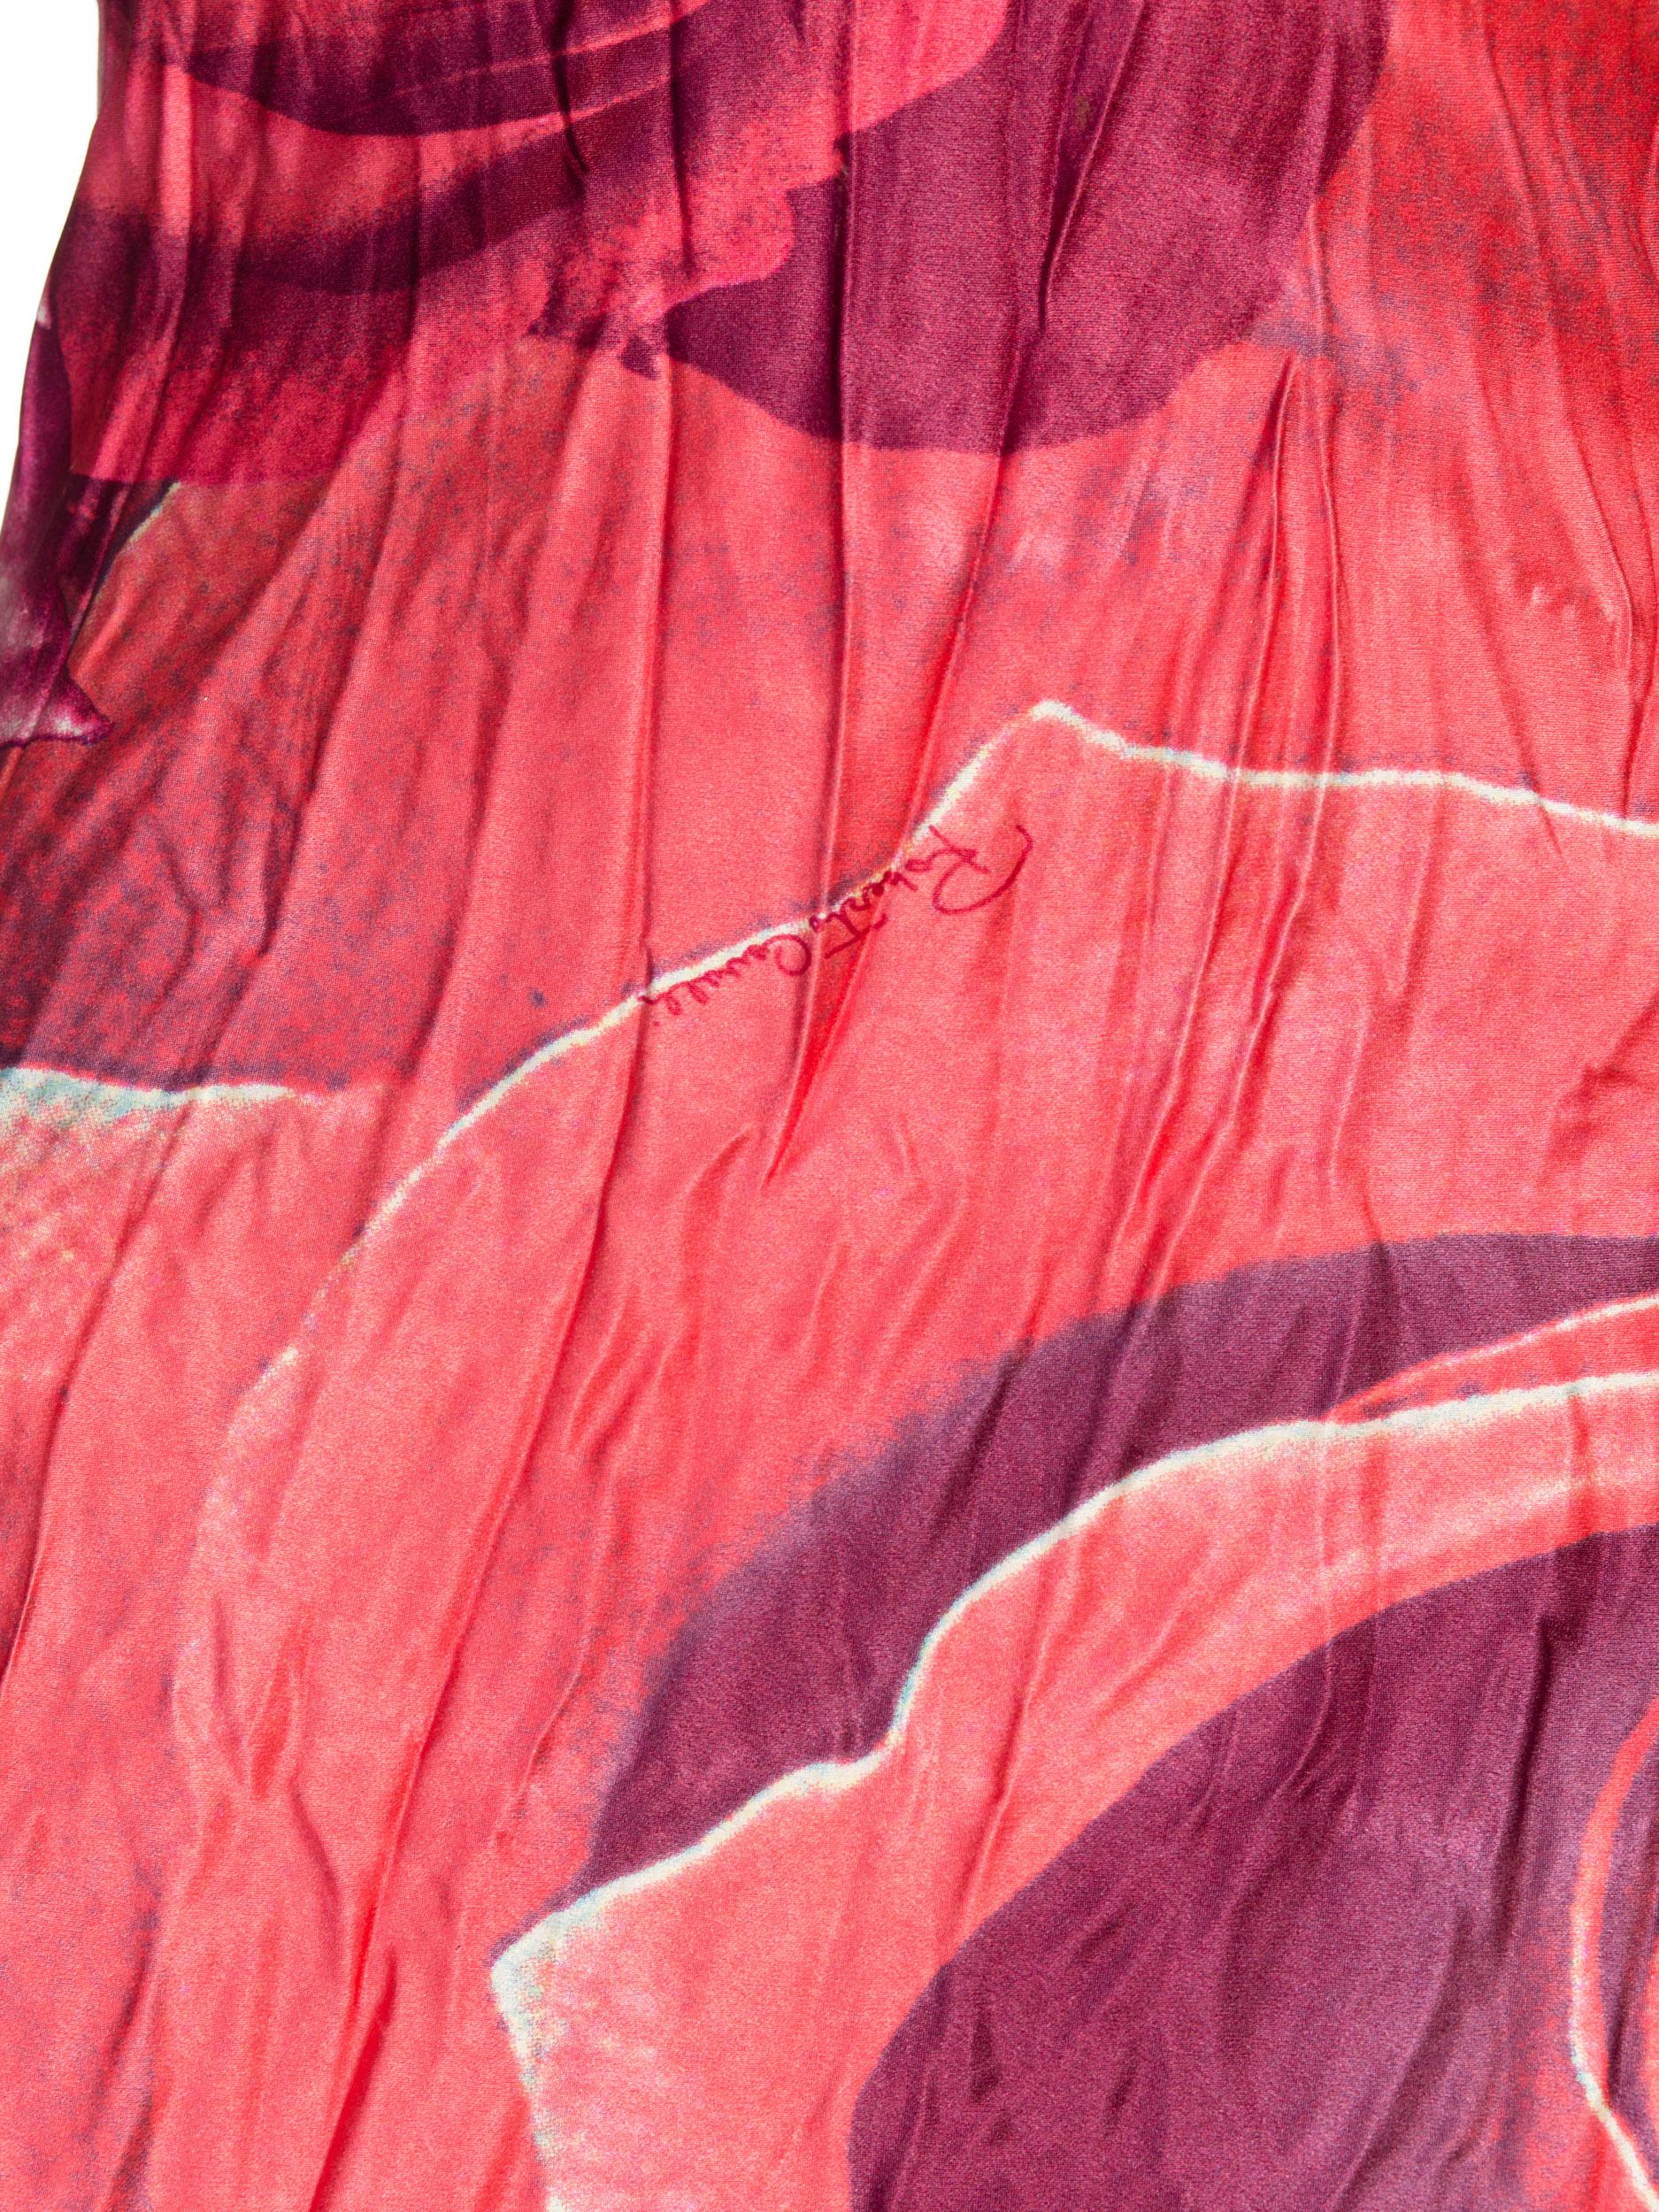 Roberto Cavalli 1990s Red Rose Printed Bias Silk Dress 7